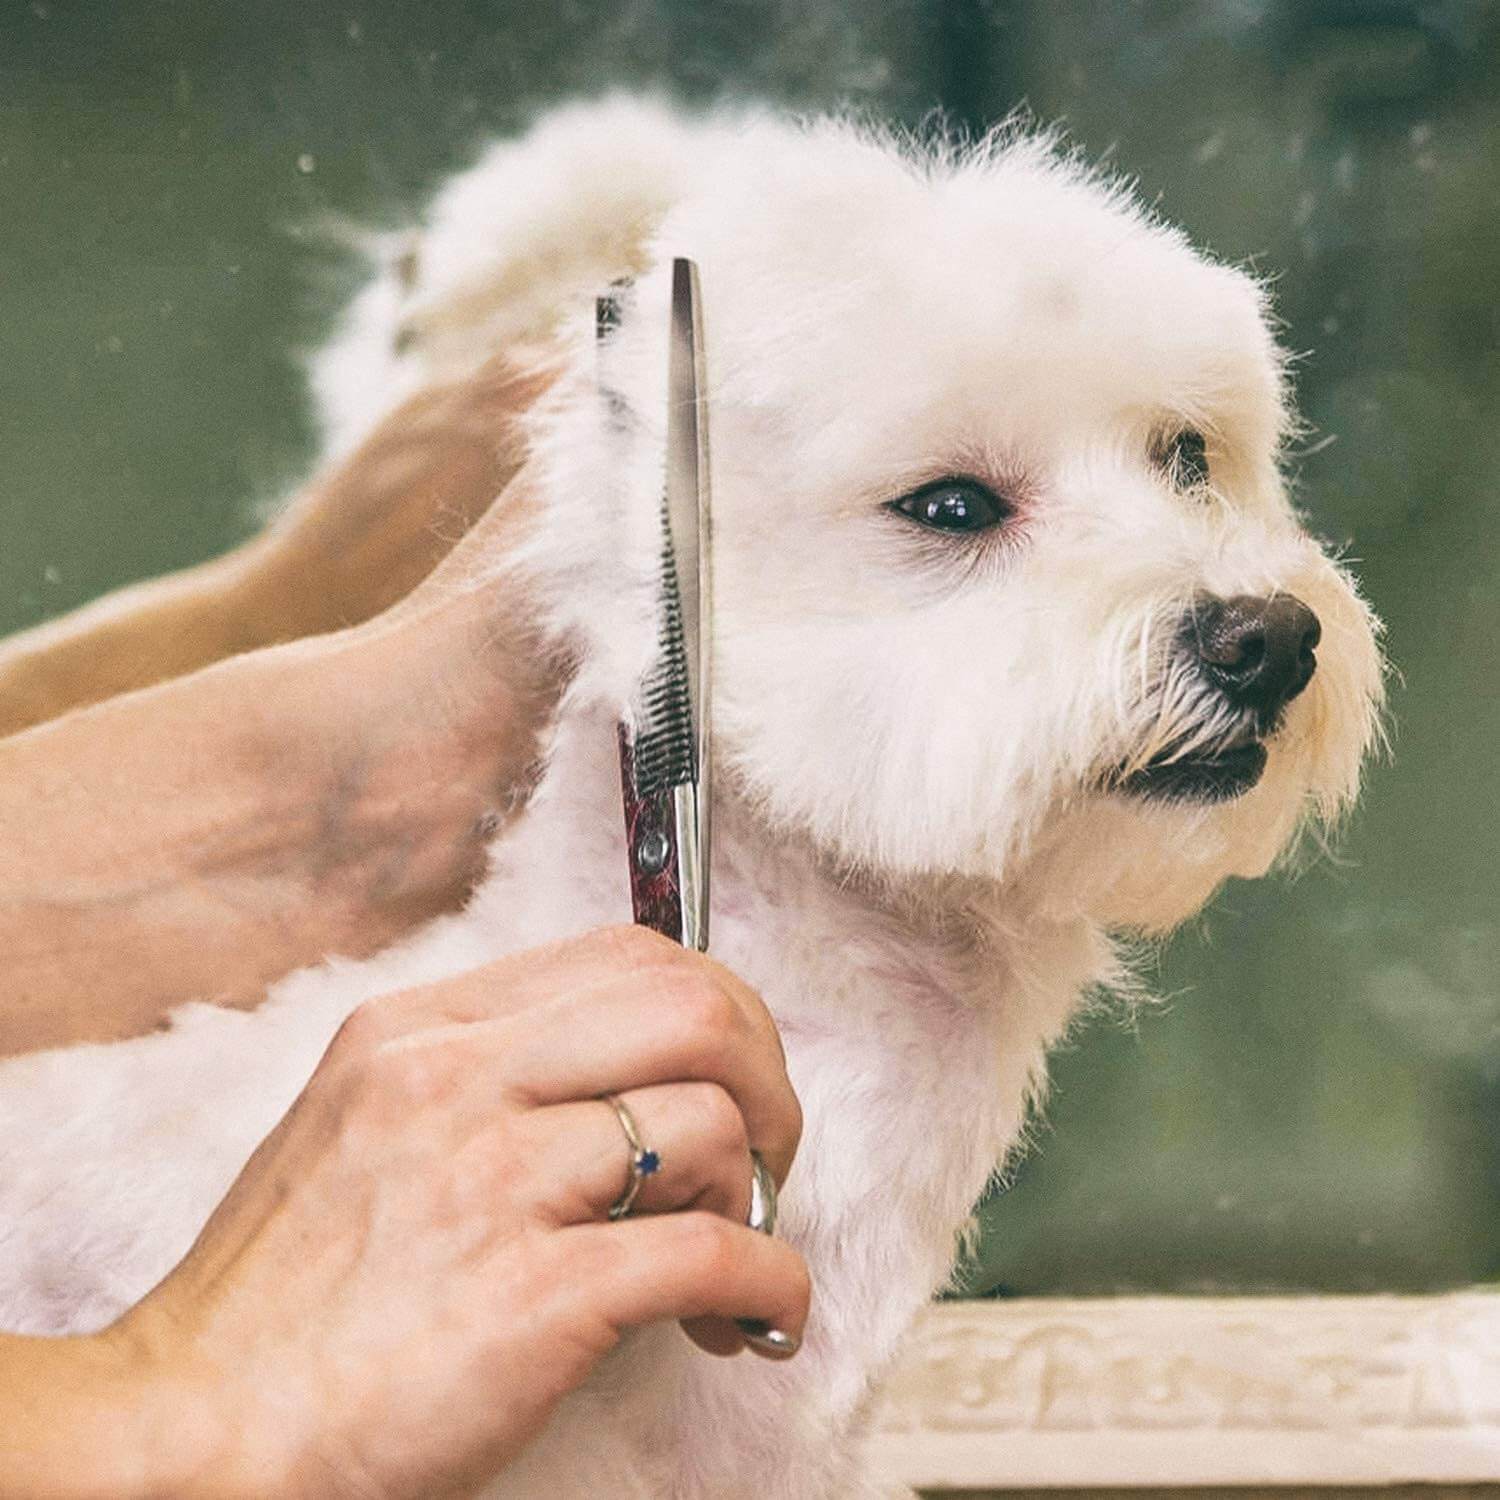 6 in 1 Professional Dog Grooming Scissors Kit - LINWEY - Best 6 in 1 Professional Dog Grooming Scissors Kit